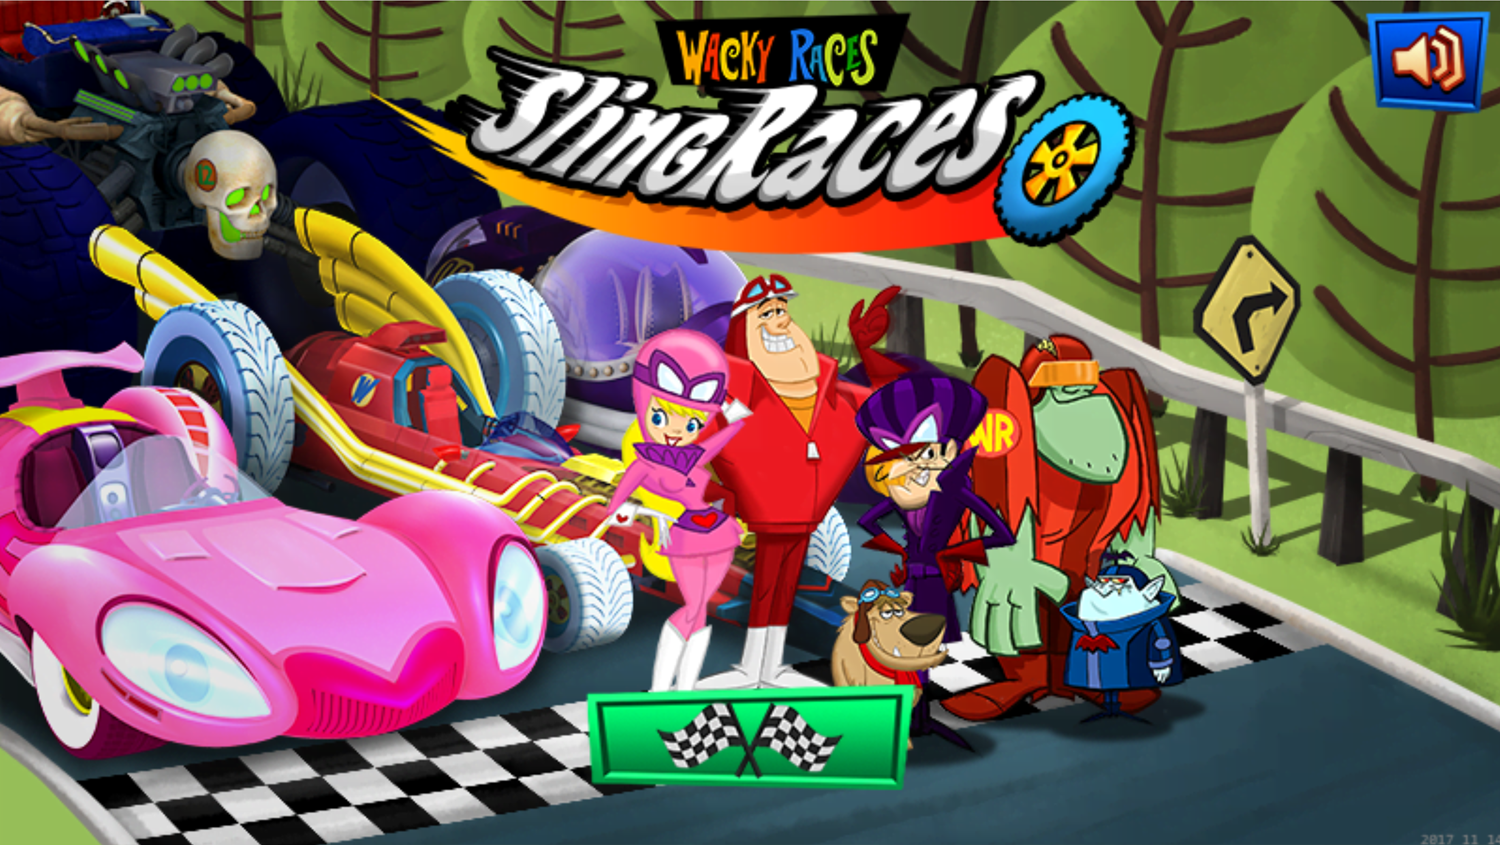 Wacky Races SlingRaces Welcome Screen Screenshot.